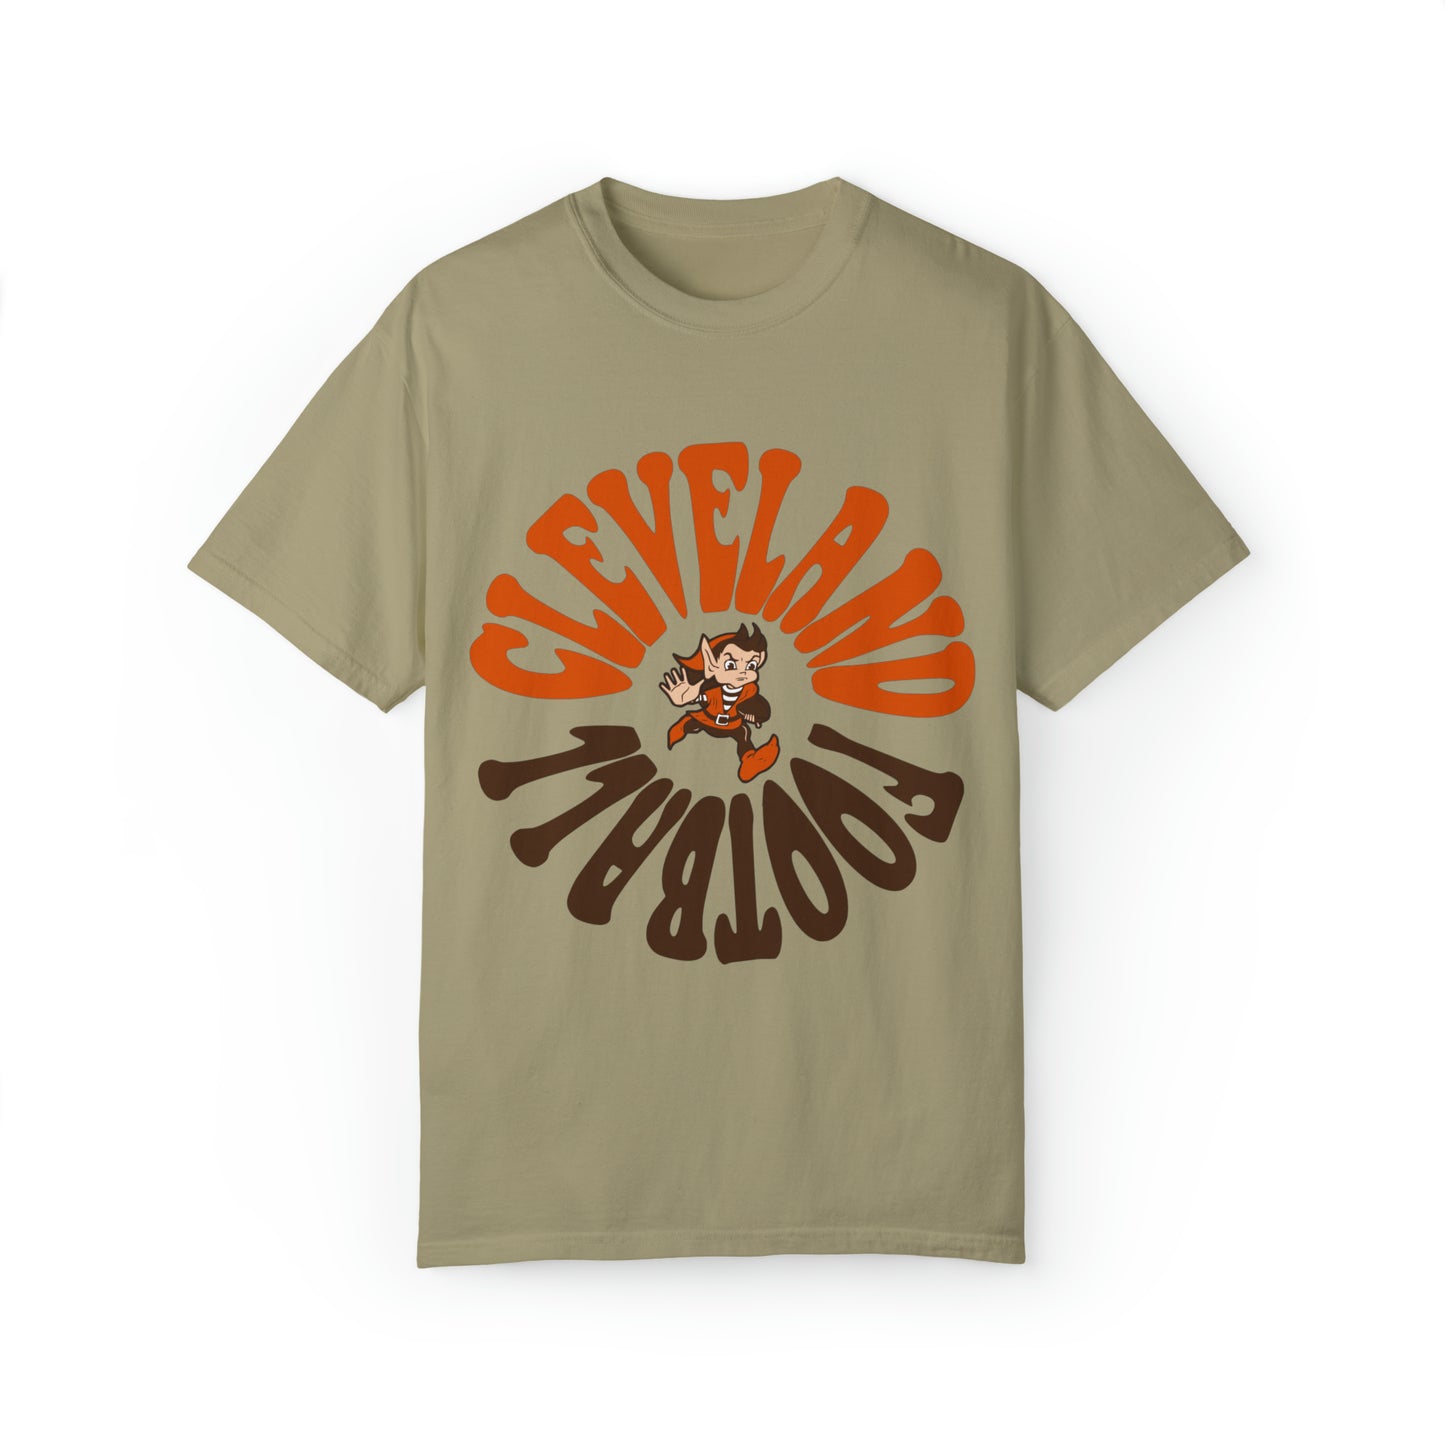 Cleveland Browns T-Shirt - Vintage Short Sleeve Tee - Comfort Colors Browns Apparel Oversized Teem - Design 5